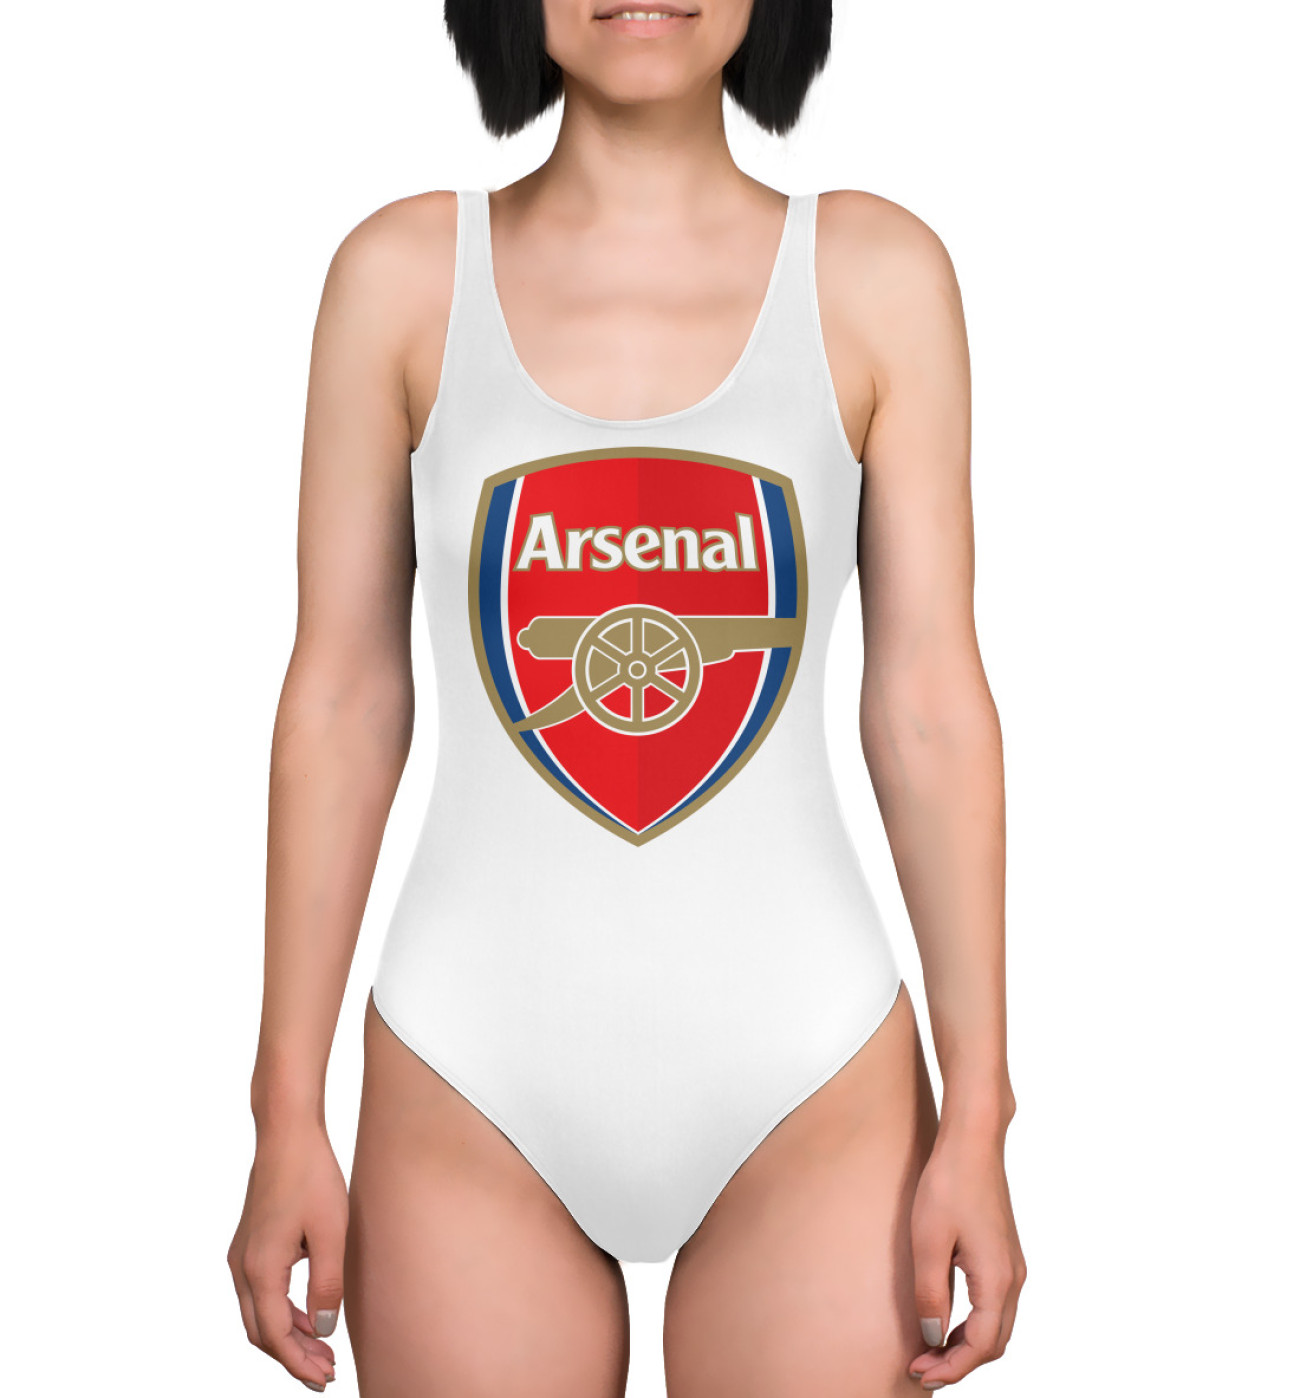 Женский Купальник-боди FC Arsenal Logo, артикул: ARS-819064-kub-1